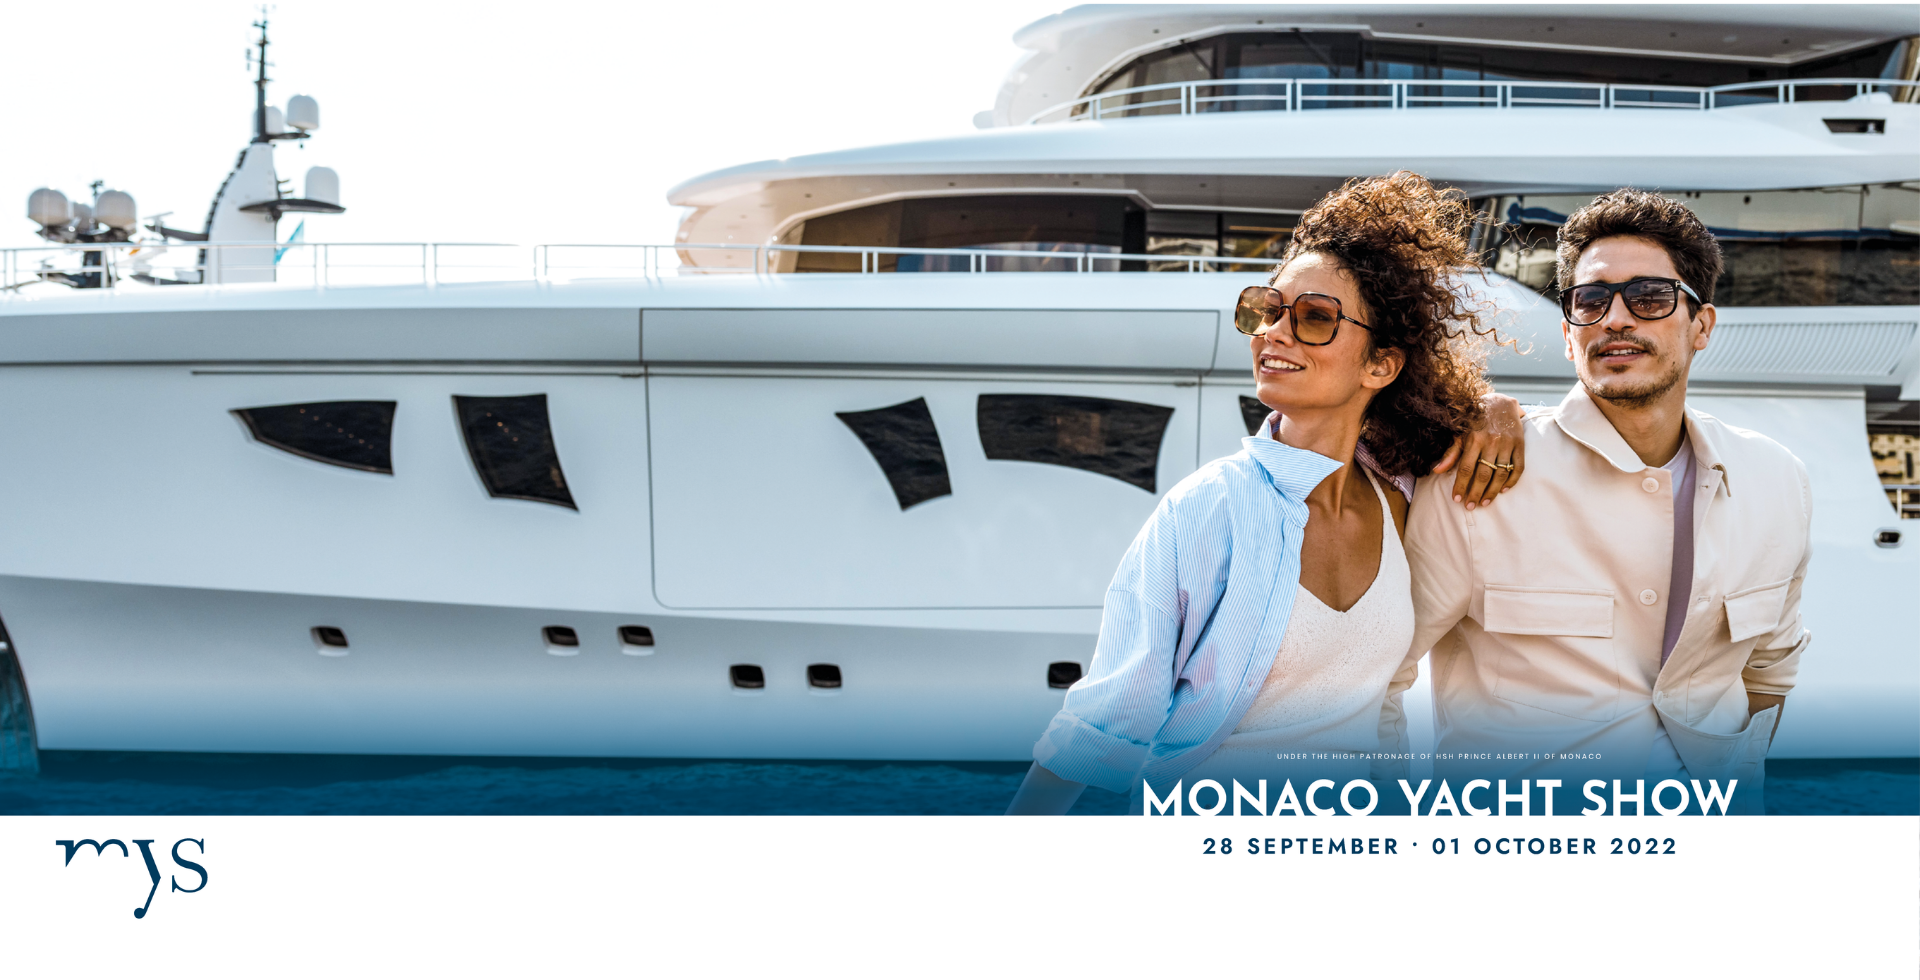 royal-van-der-leun-yachting-monaco-yacht-show-2022-liggend